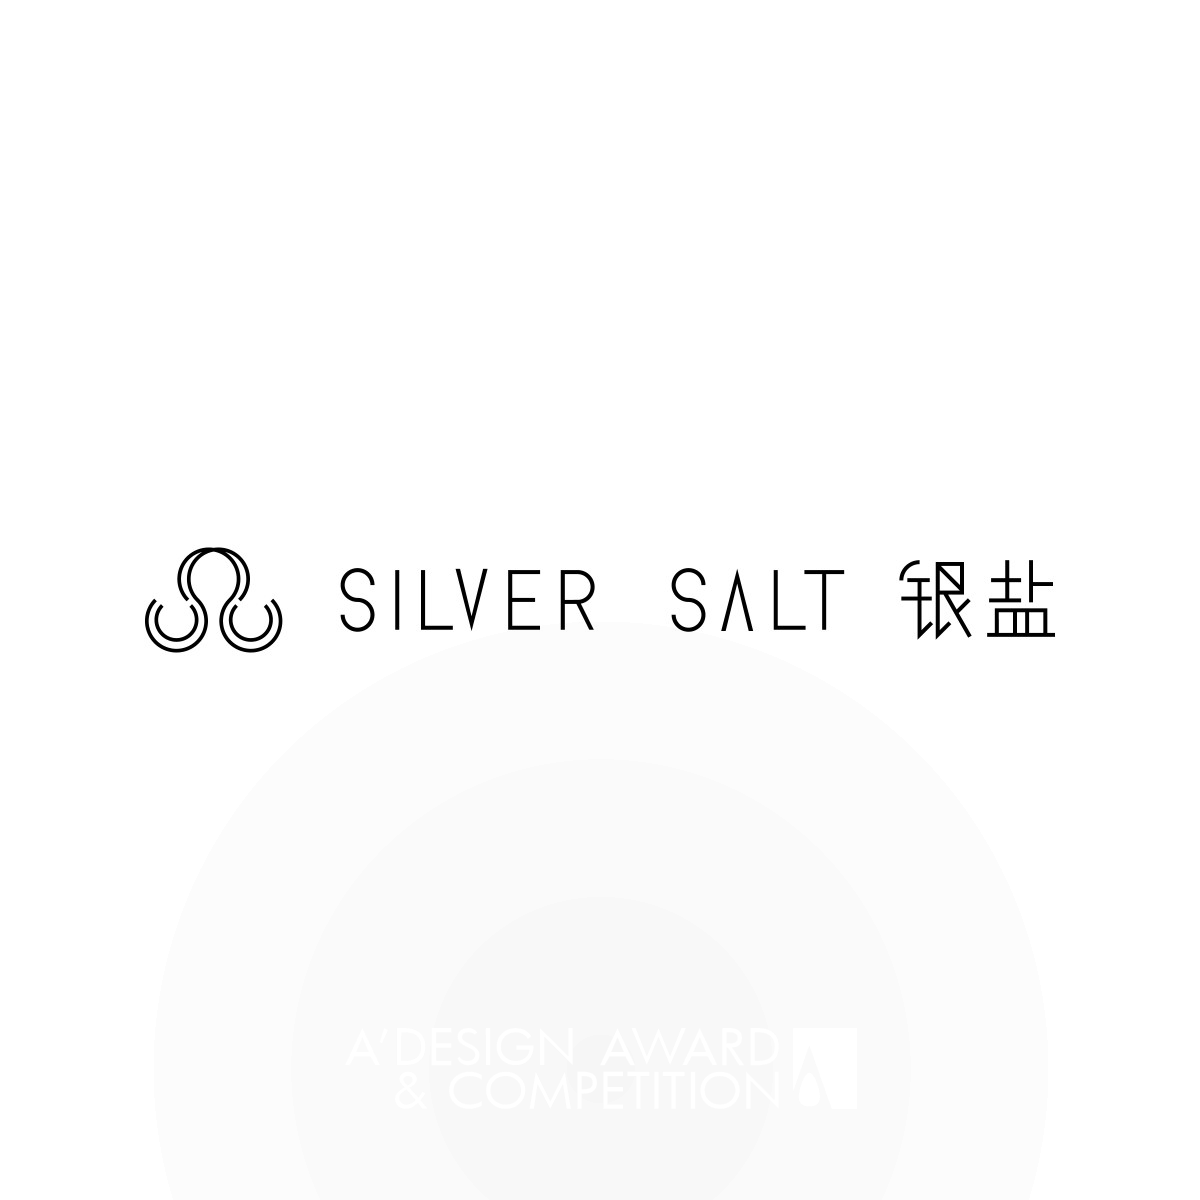 Silver Salt Corporate Identity by Lesser Fullness Design